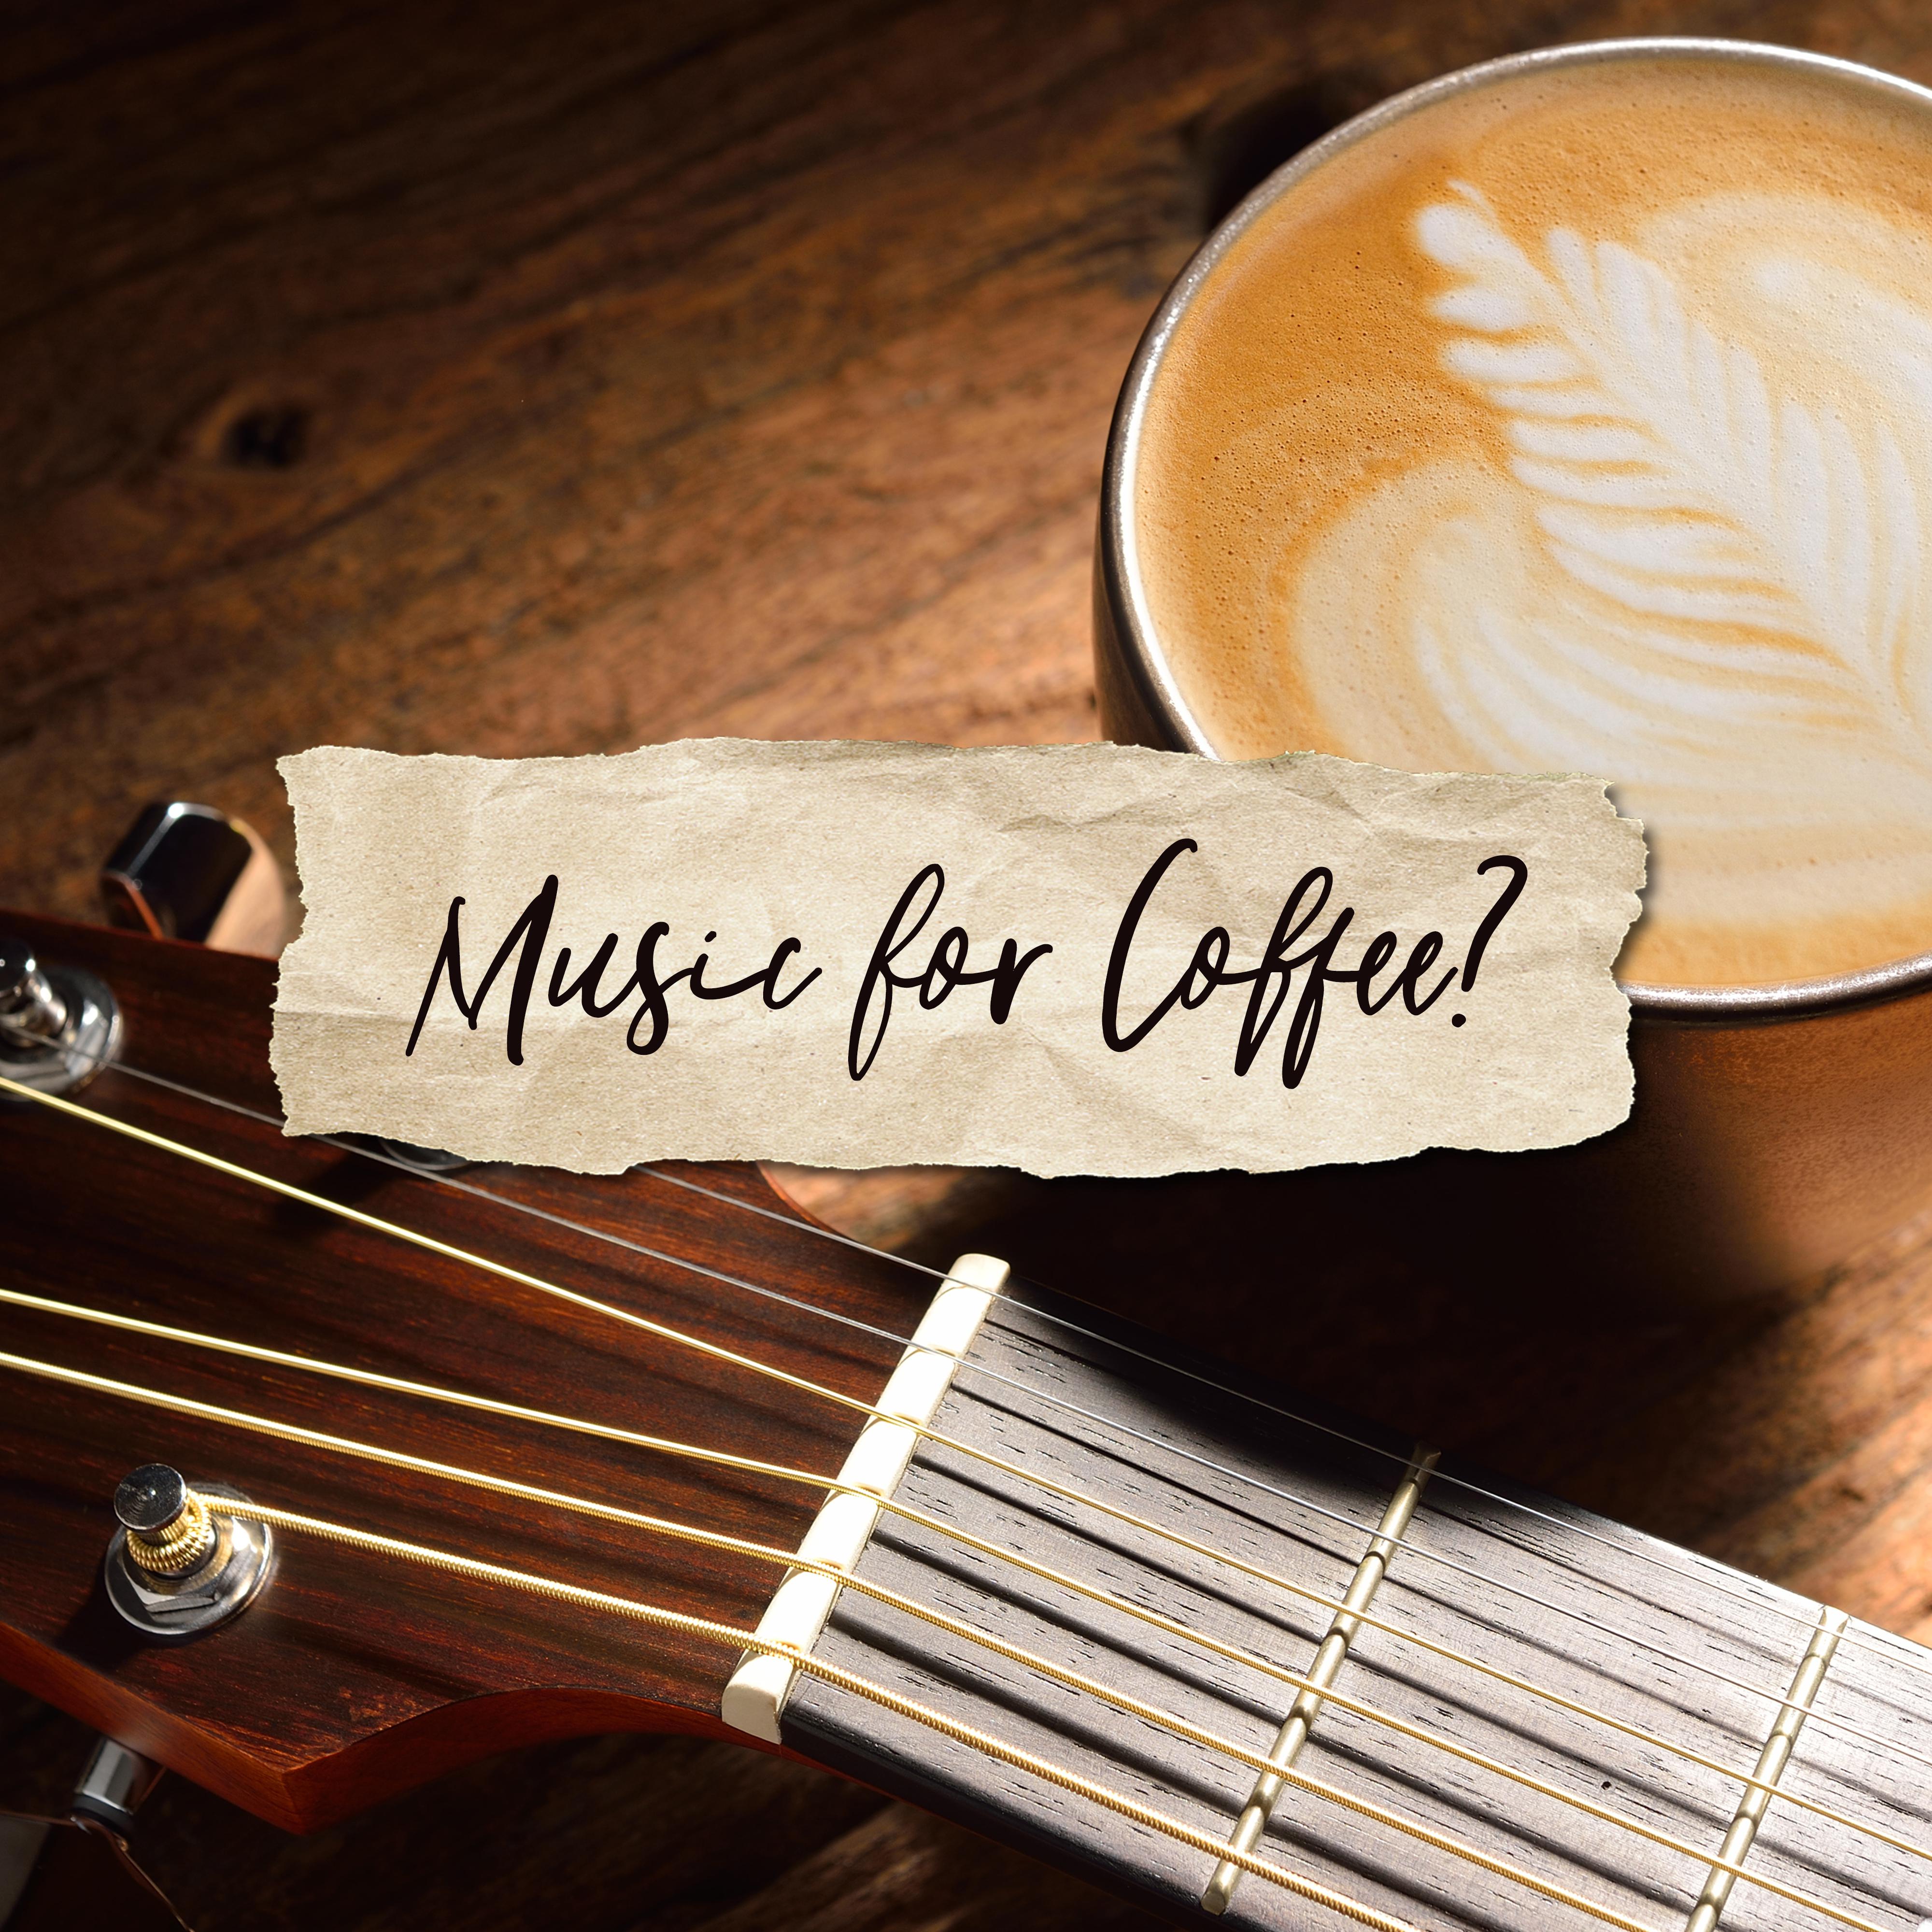 Music for Coffee? Instrumental Jazz Musical Set 2019